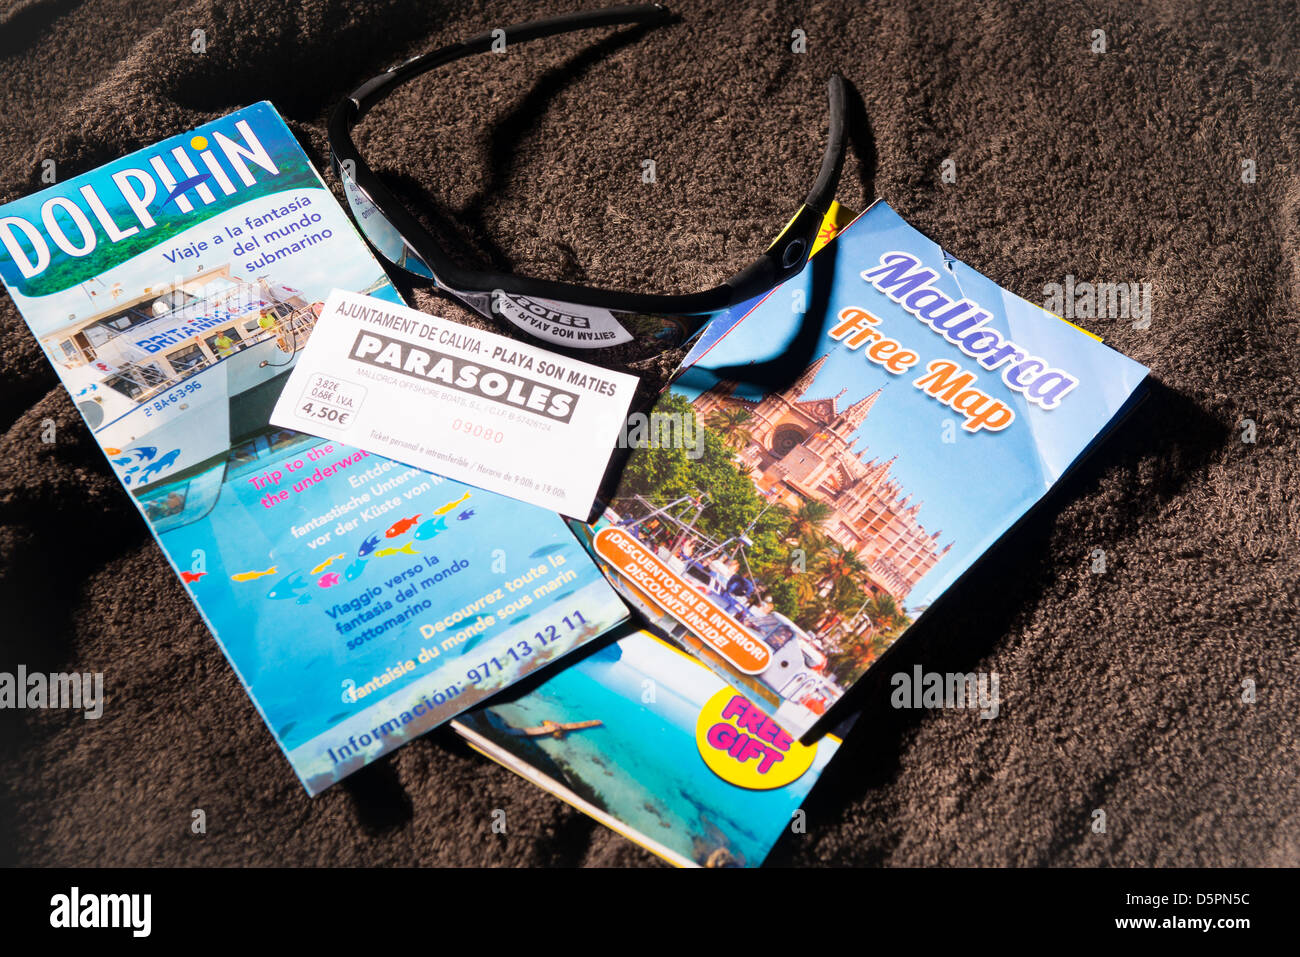 Mallorca holliday brochures on towel Stock Photo